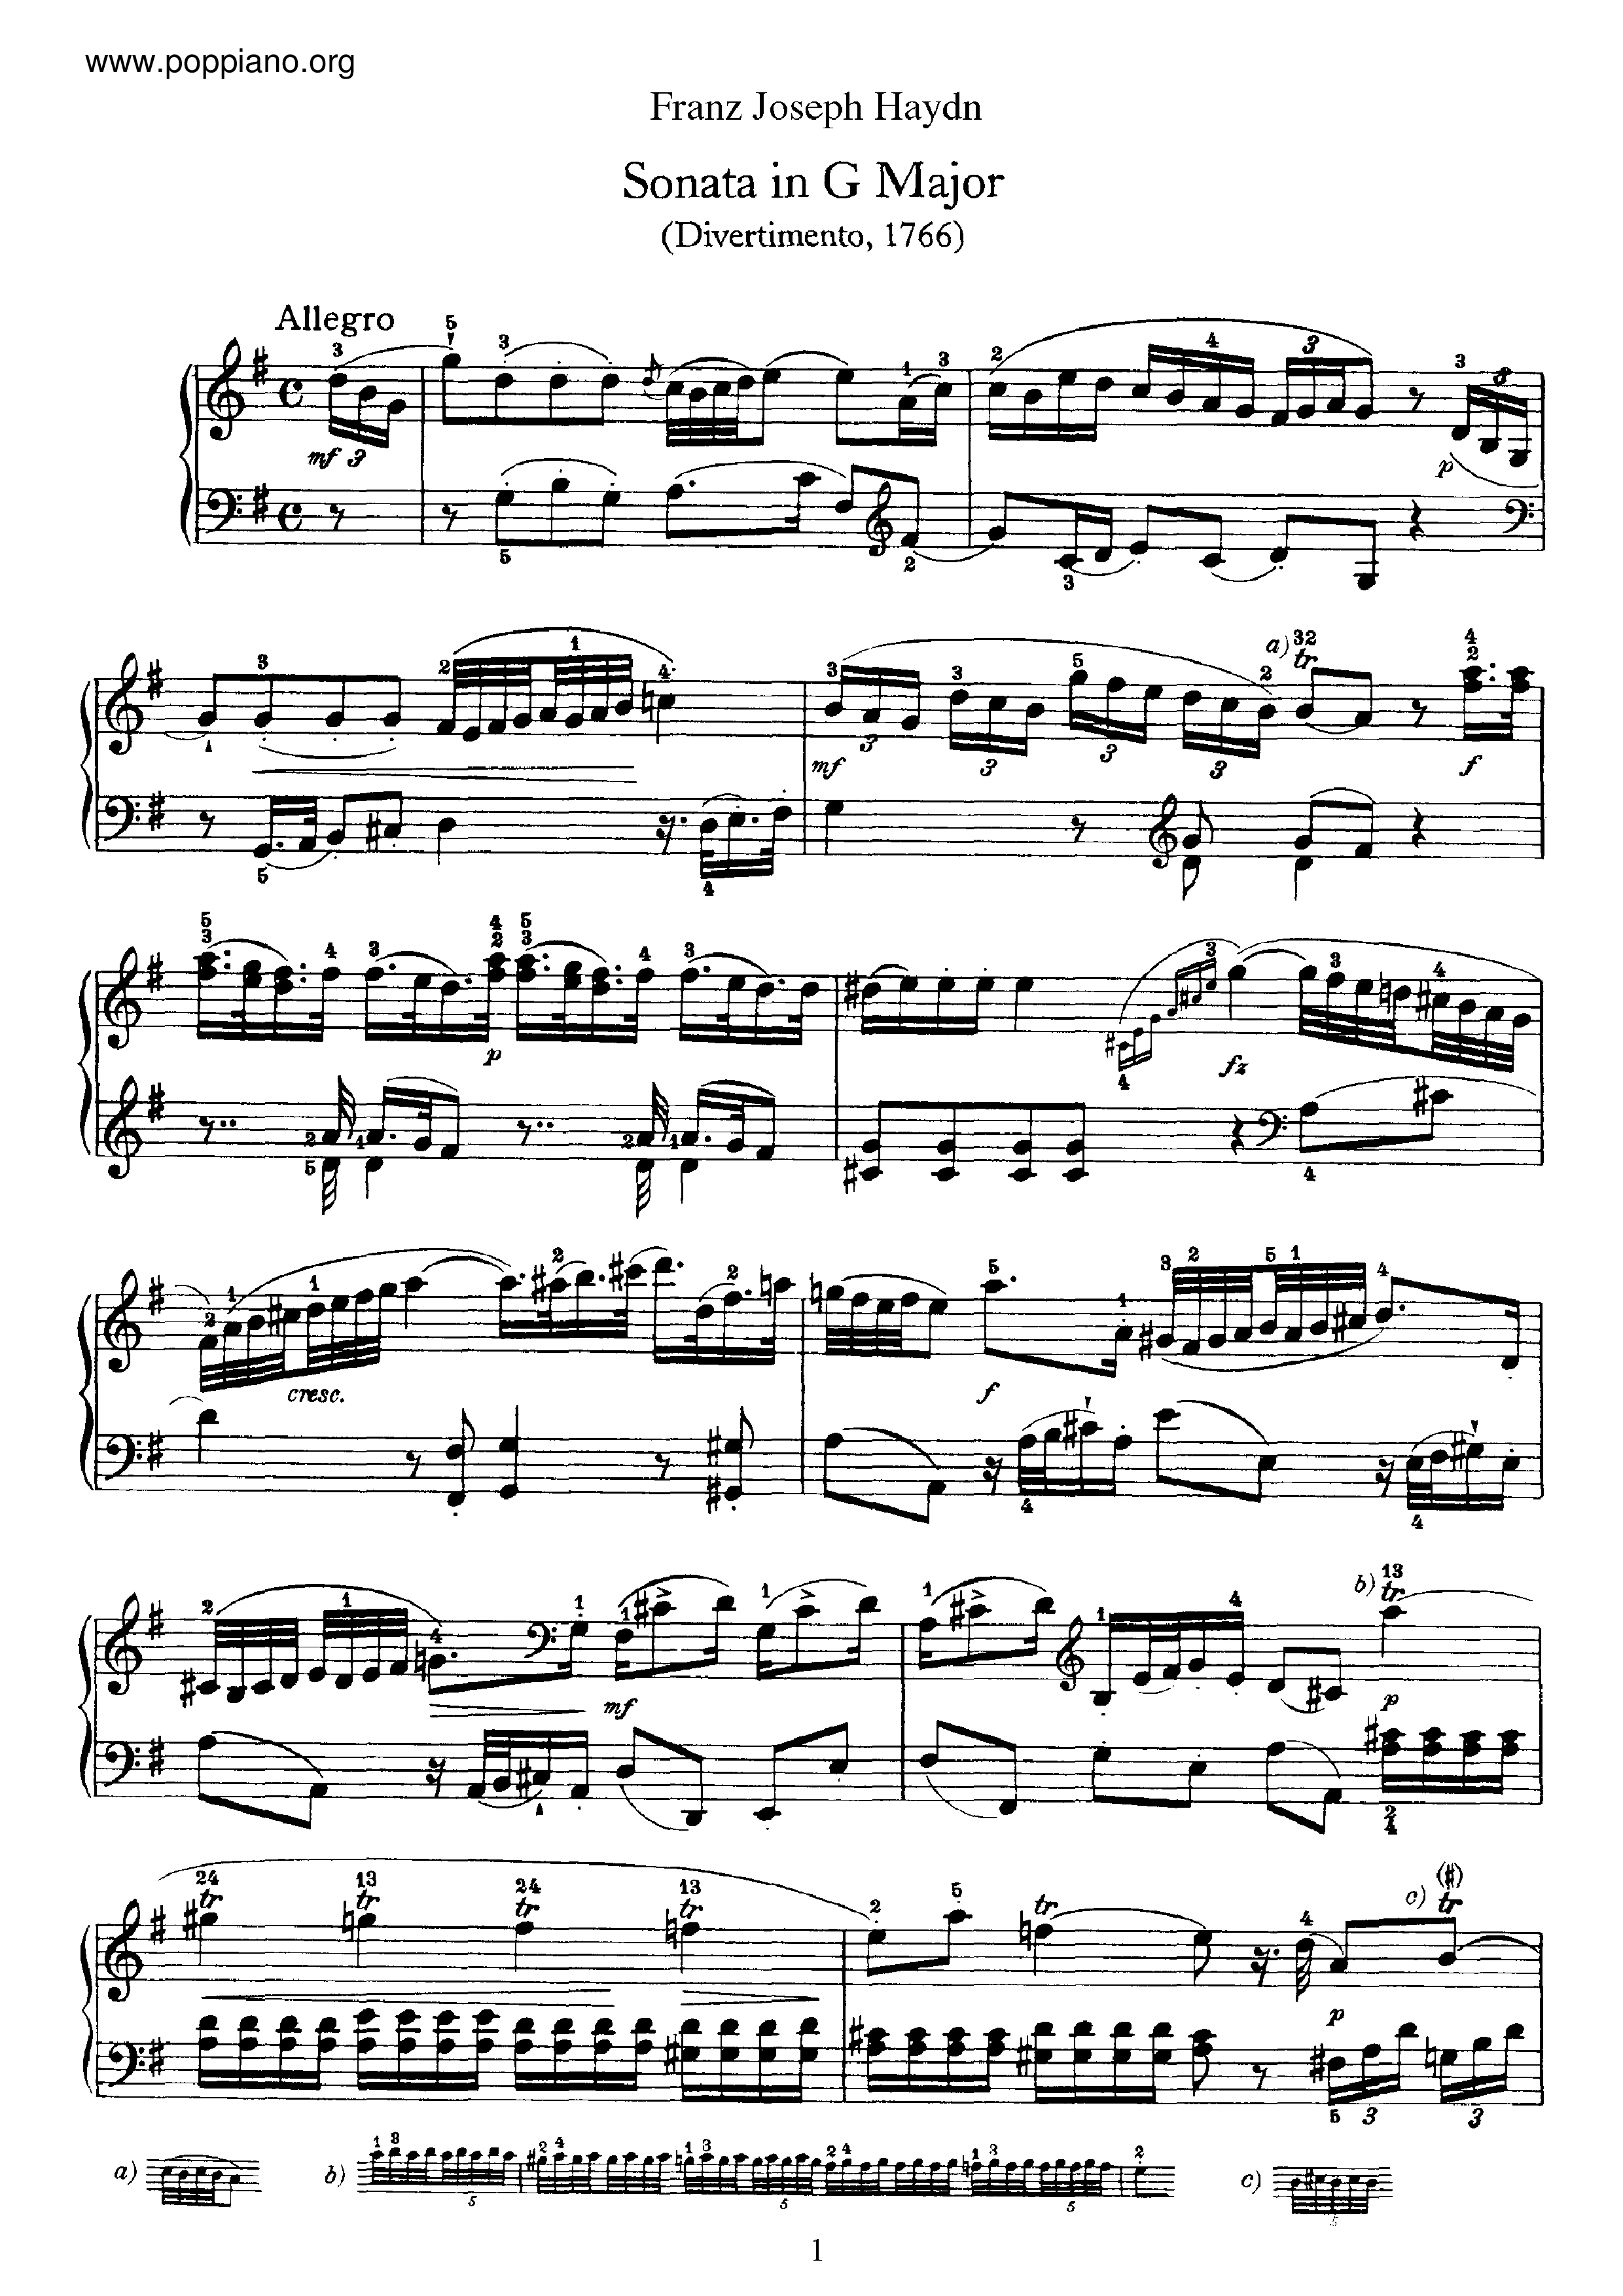 Sonata No.6 in G majorピアノ譜